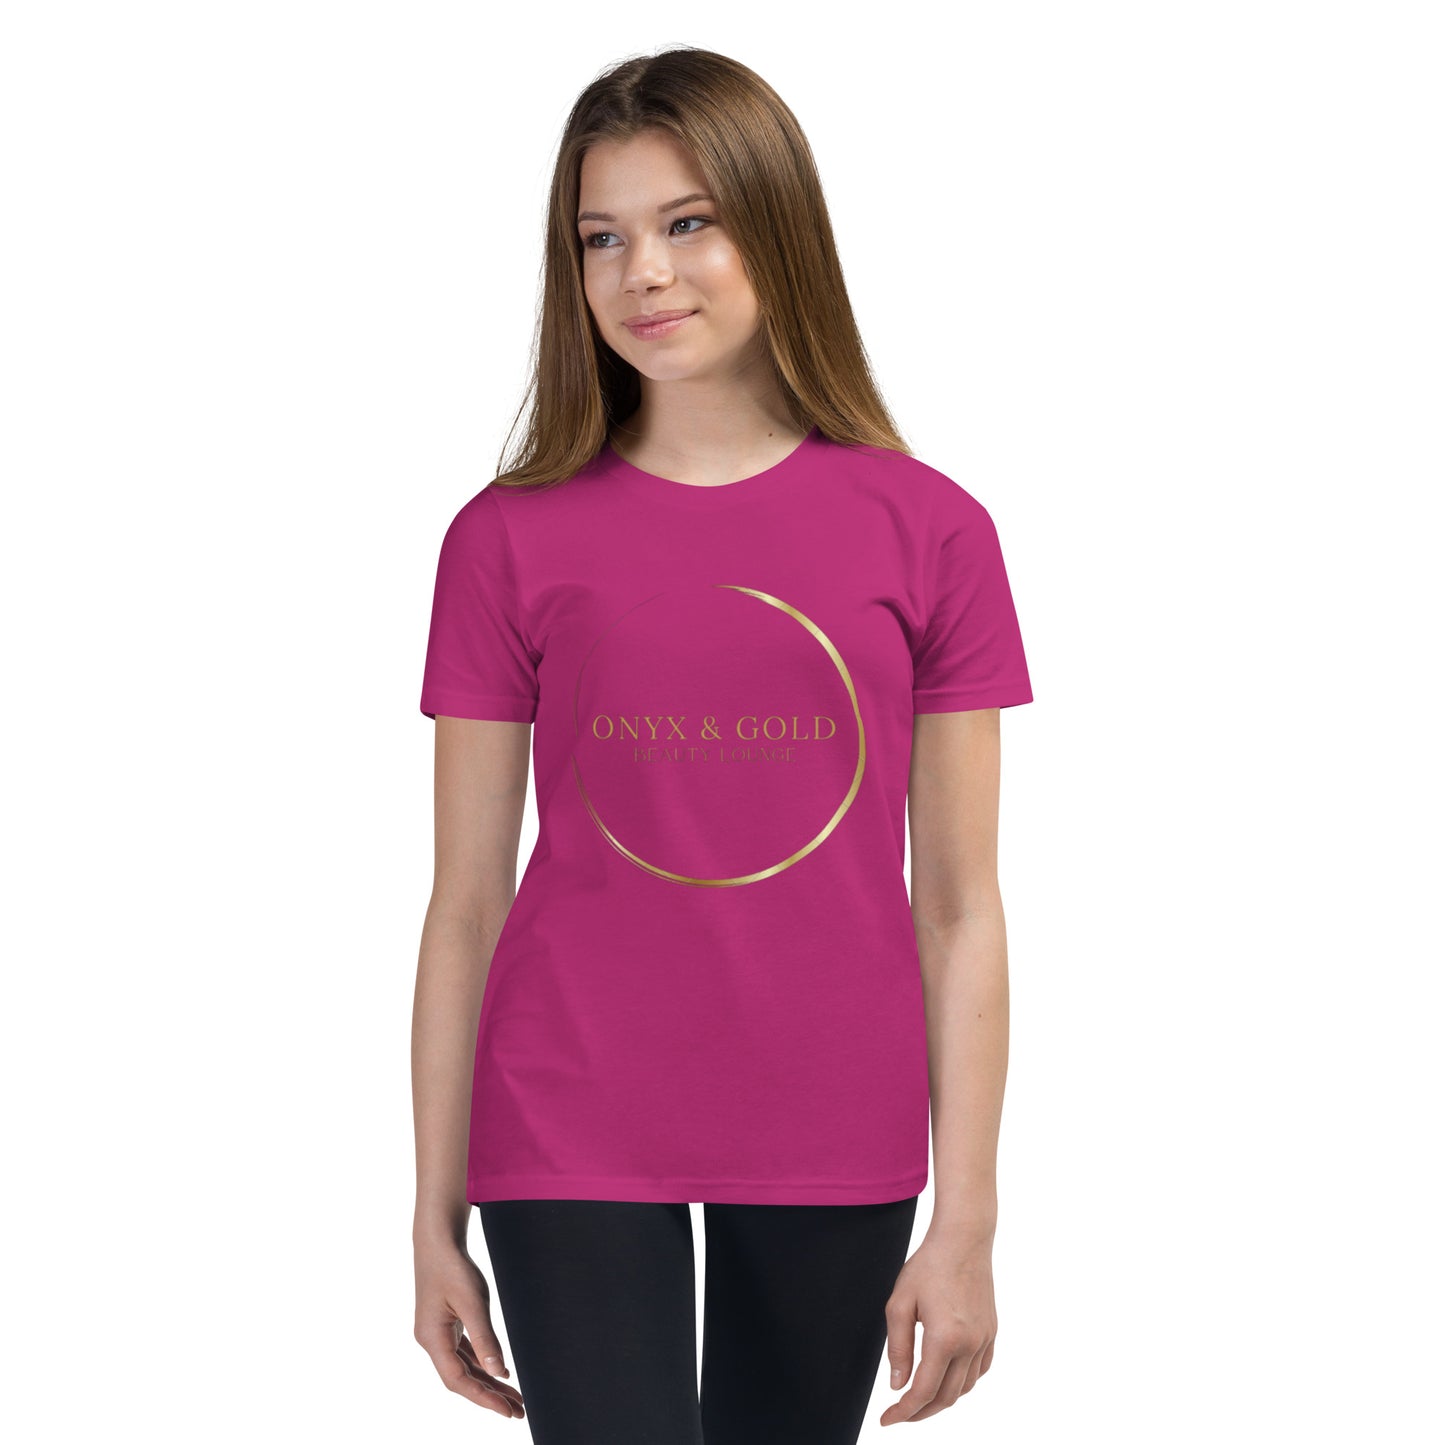 Onyx & Gold - Youth Short Sleeve T-Shirt - Gold Logo